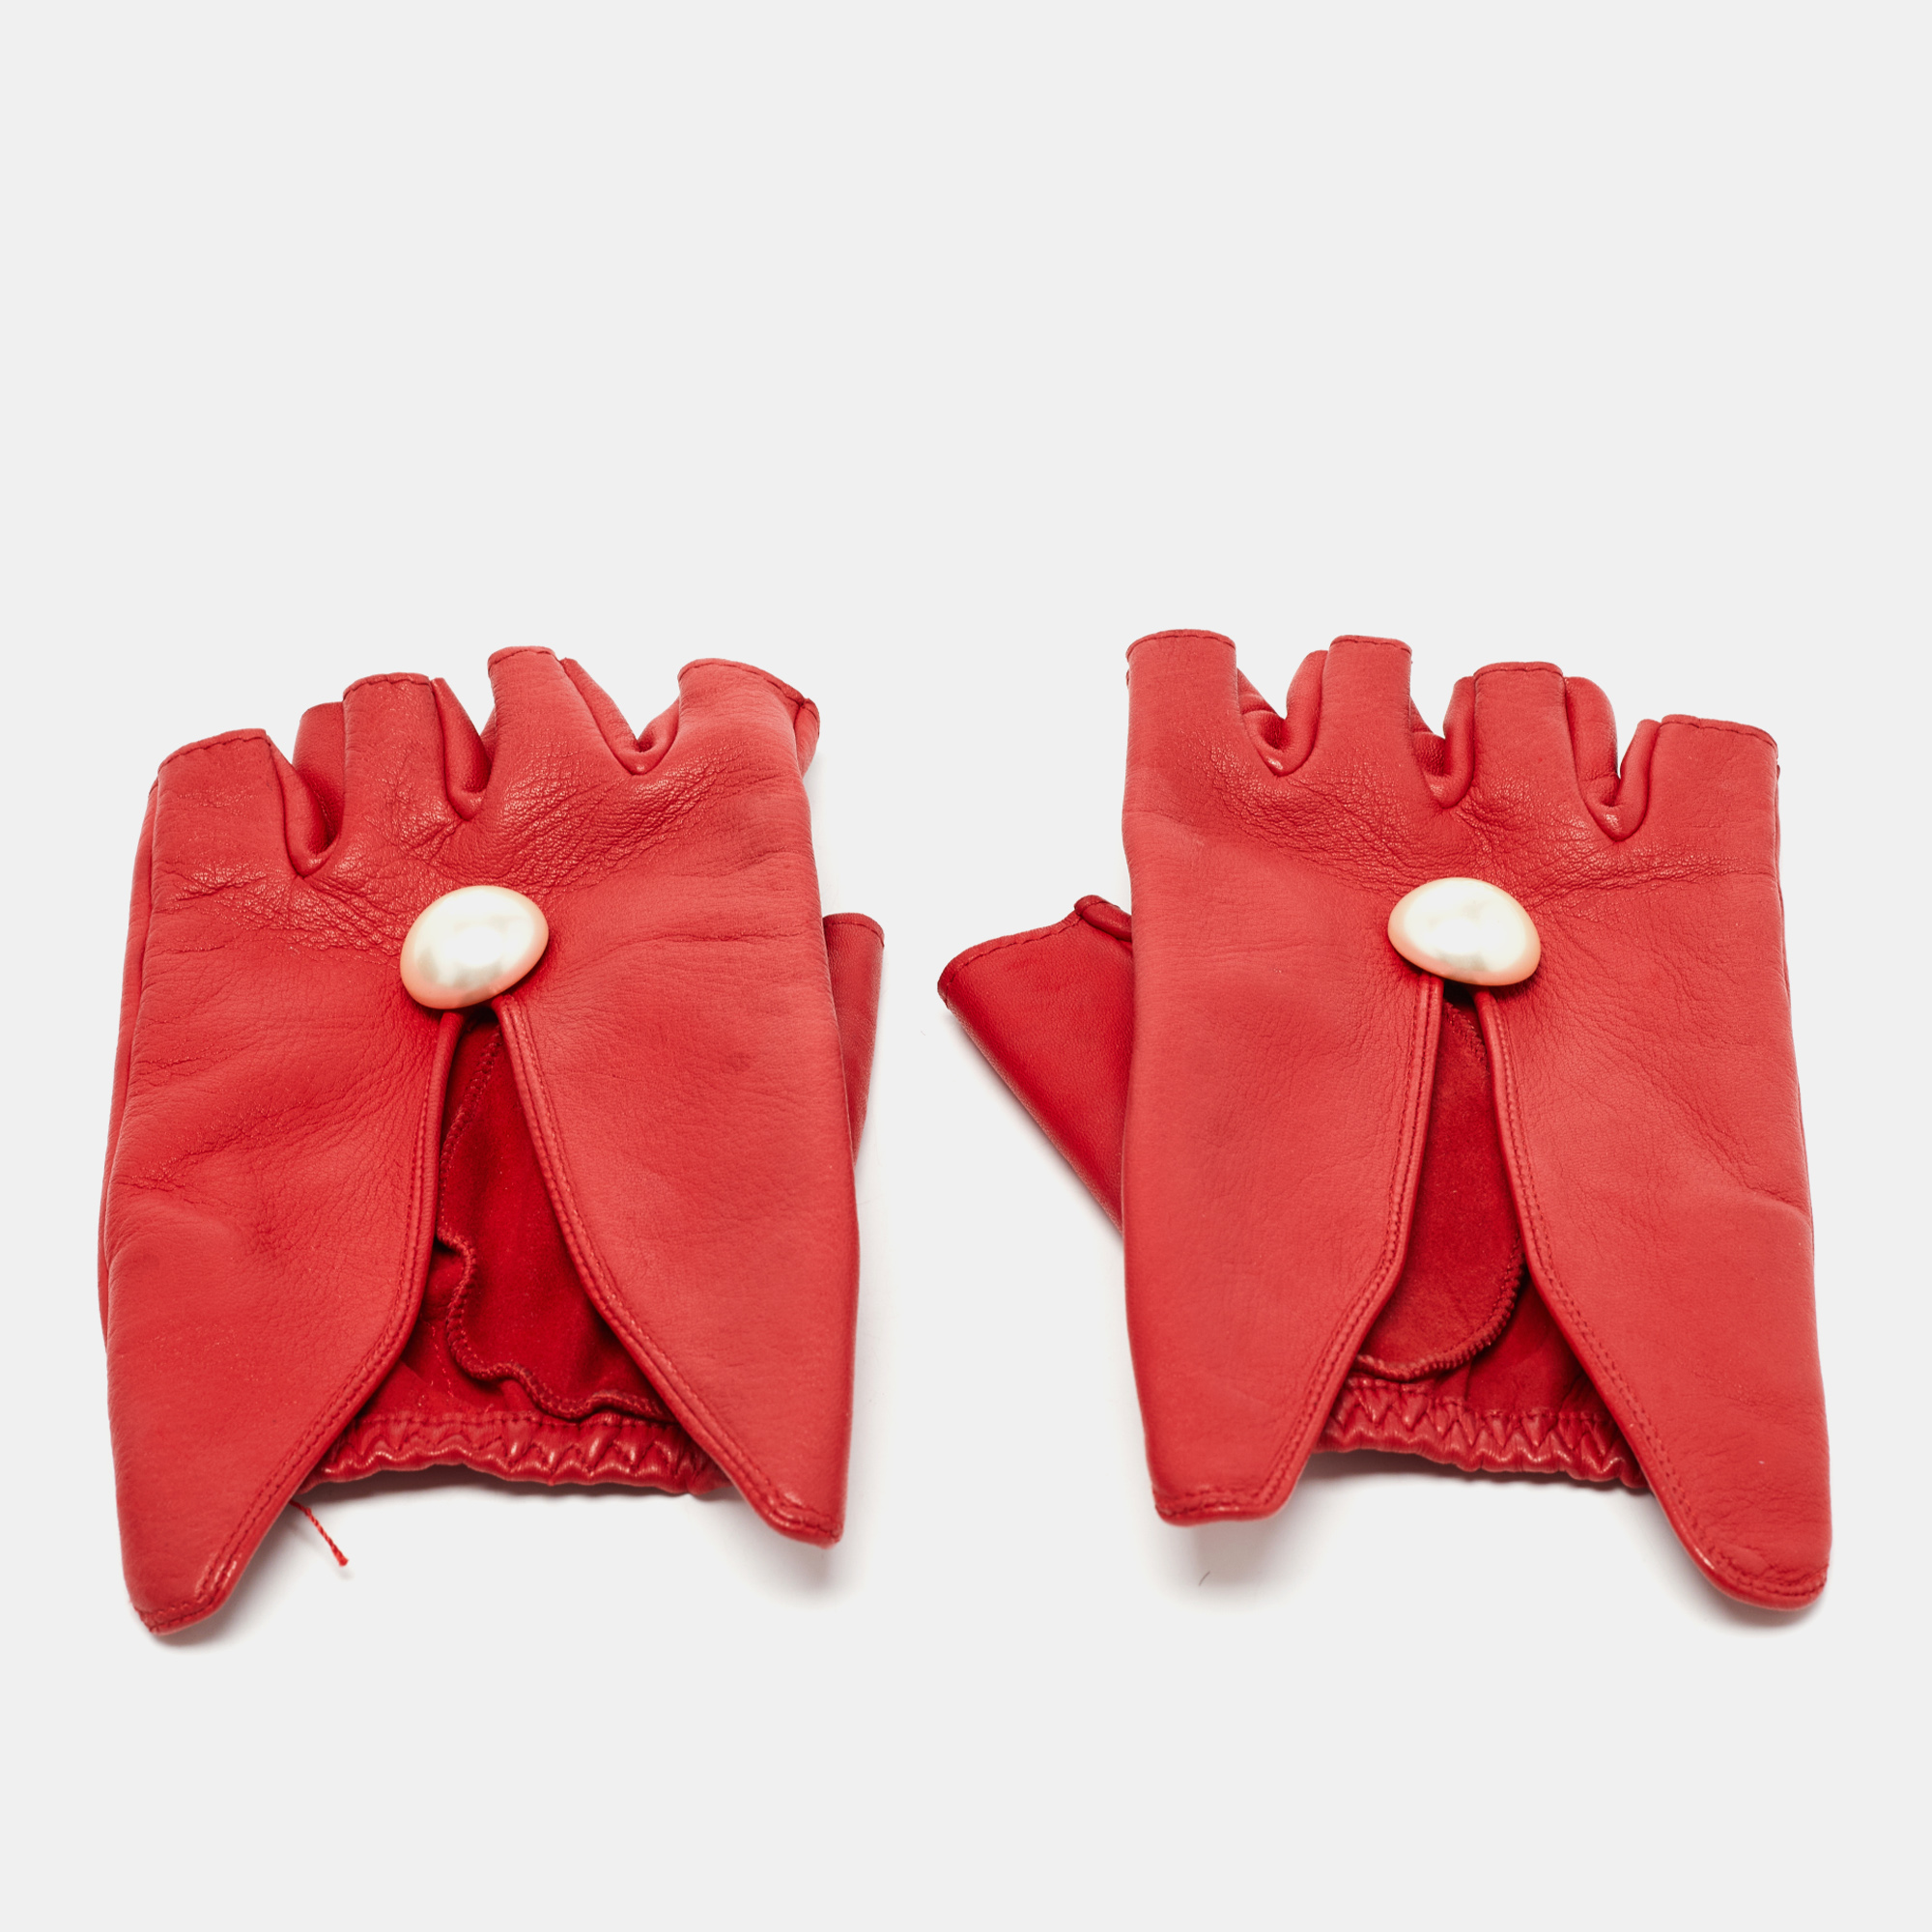 CHANEL Lambskin Stitched Fingerless CC Embellished Gloves 7 Black 242123